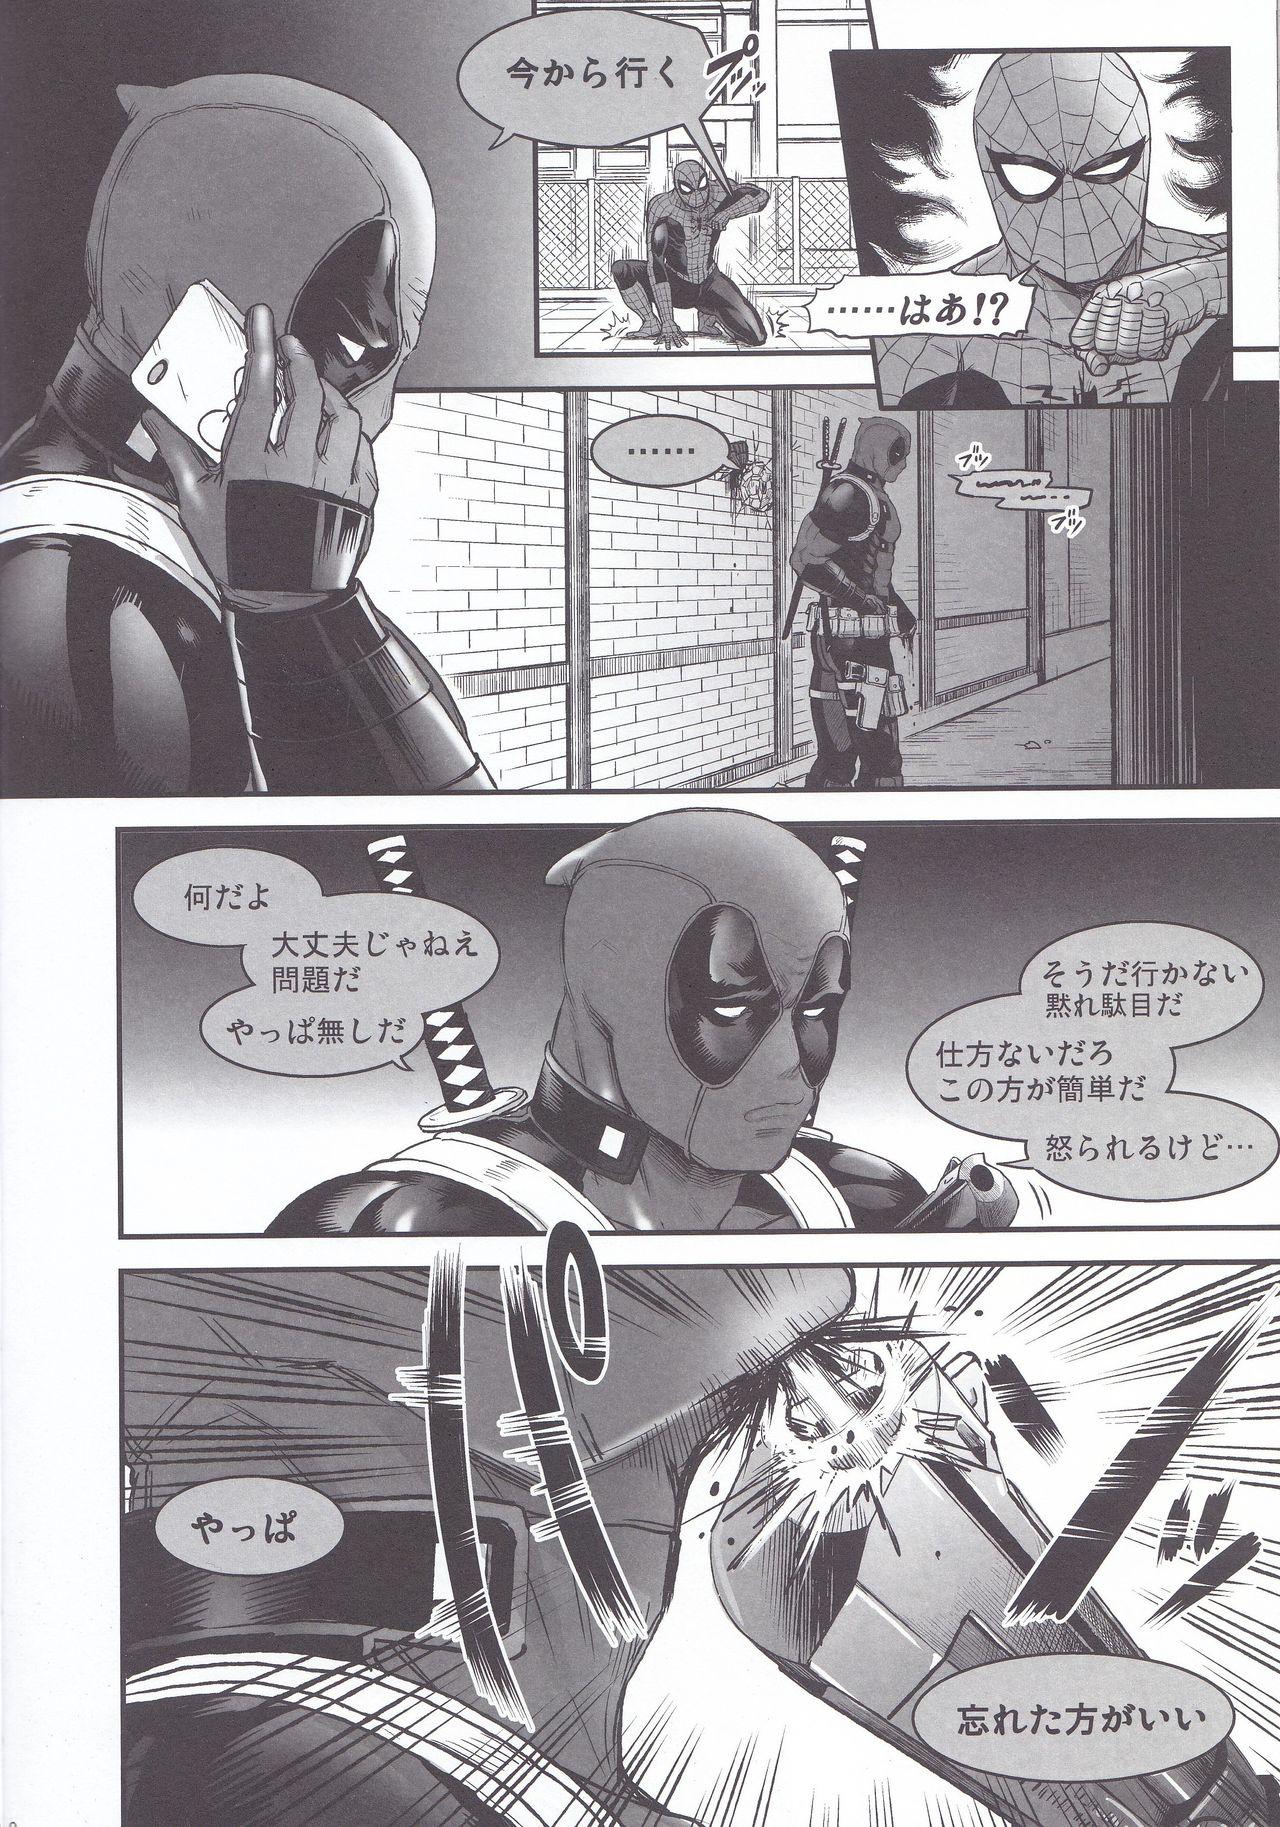 Gordibuena Hollow - Spider man Deadpool Time - Page 8